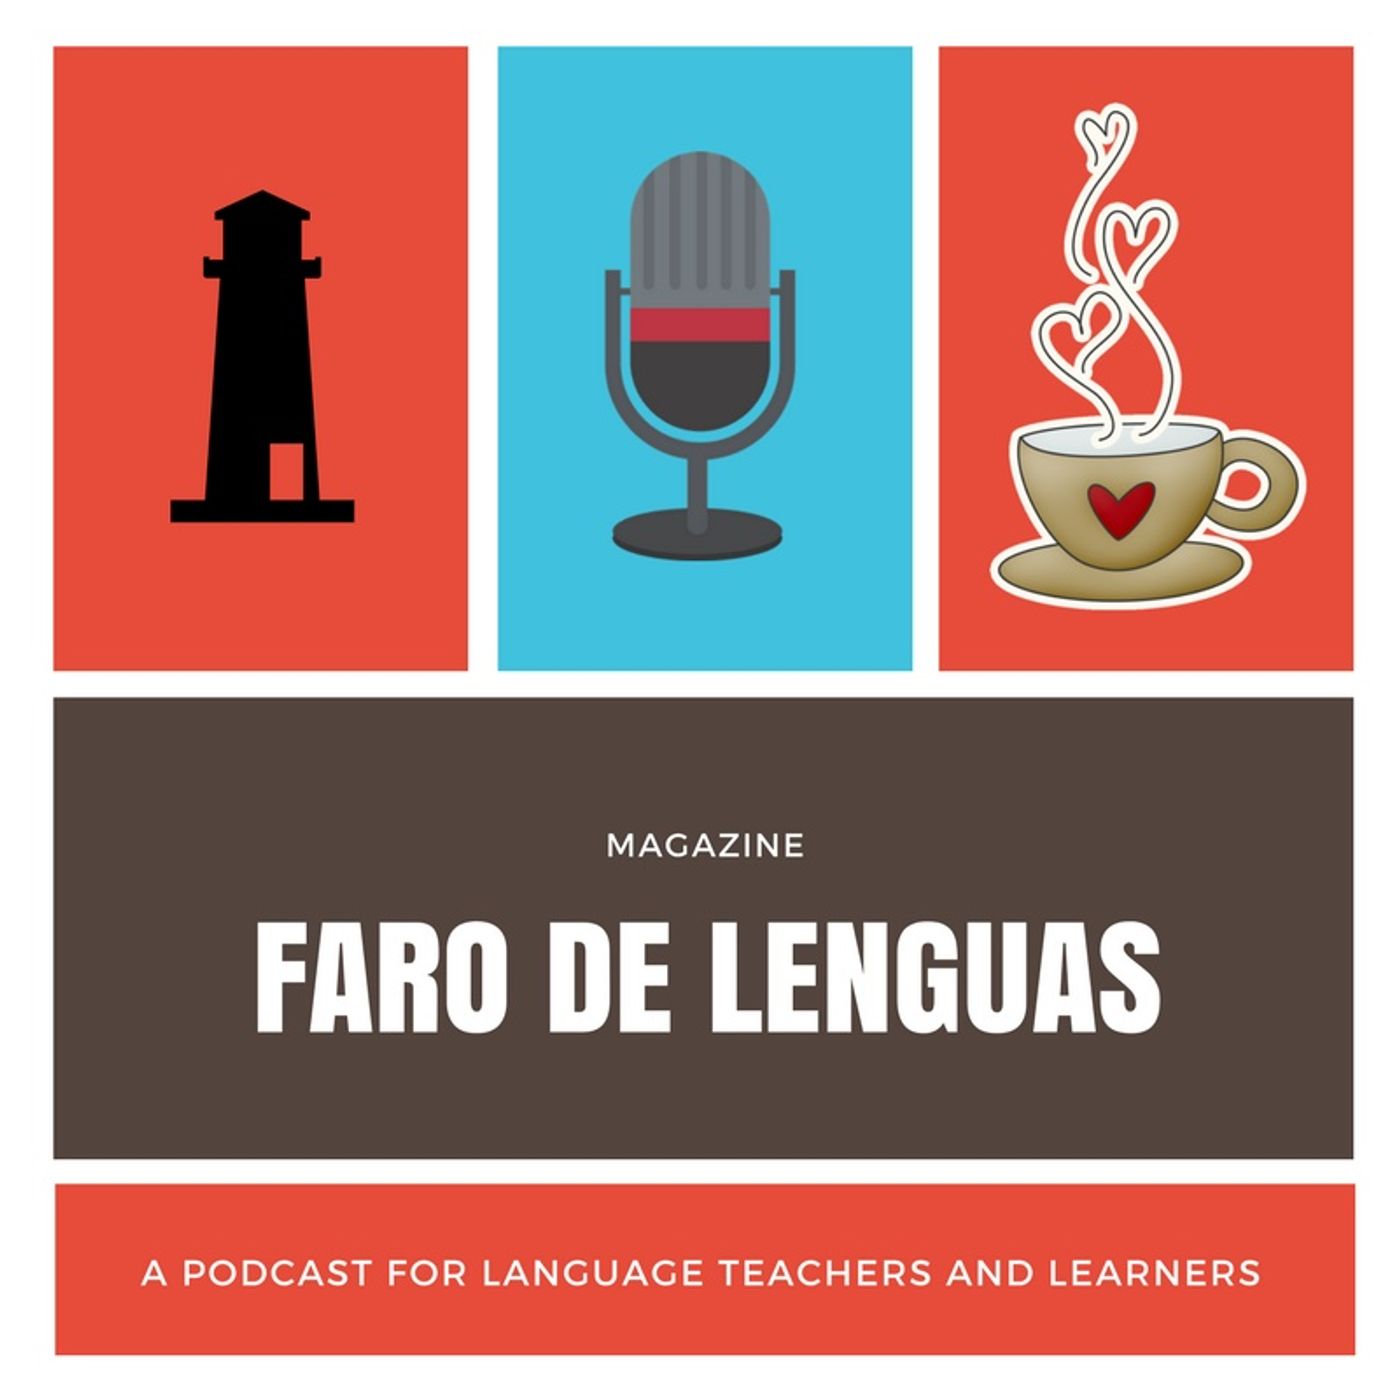 Promotional podcast of Faro de Lenguas magazine